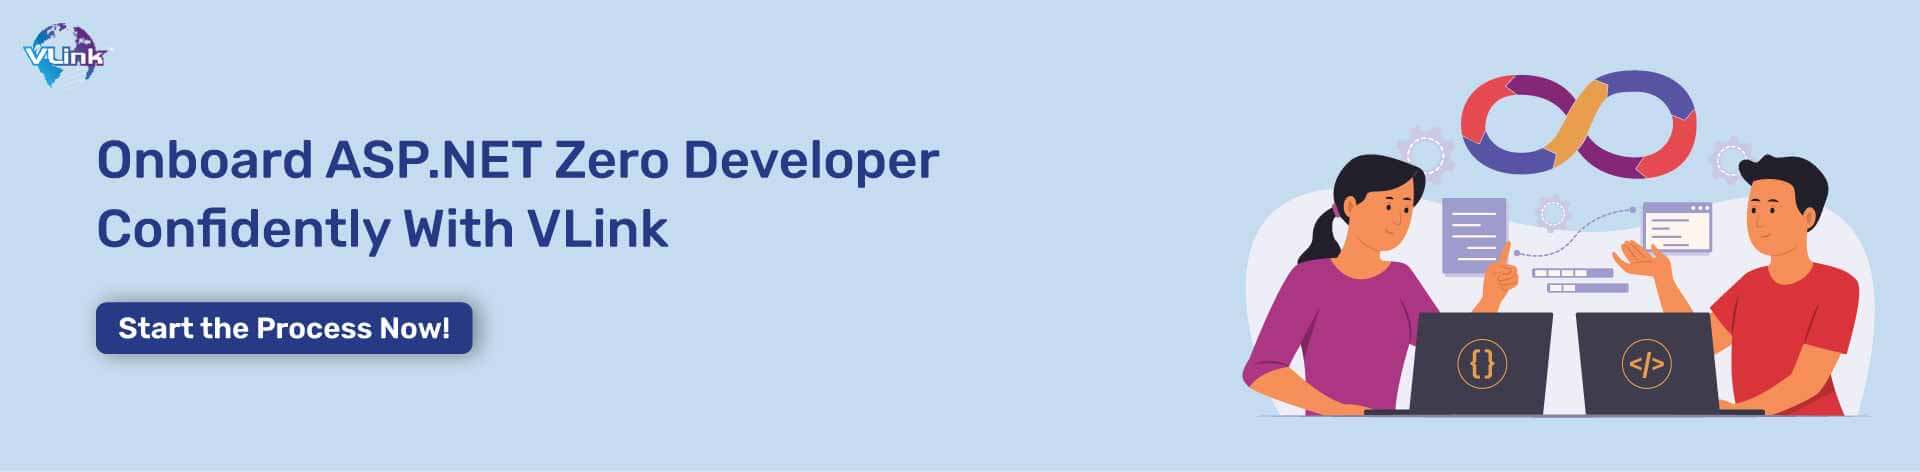 hire-asp-dot-net-zero-developers-cta1